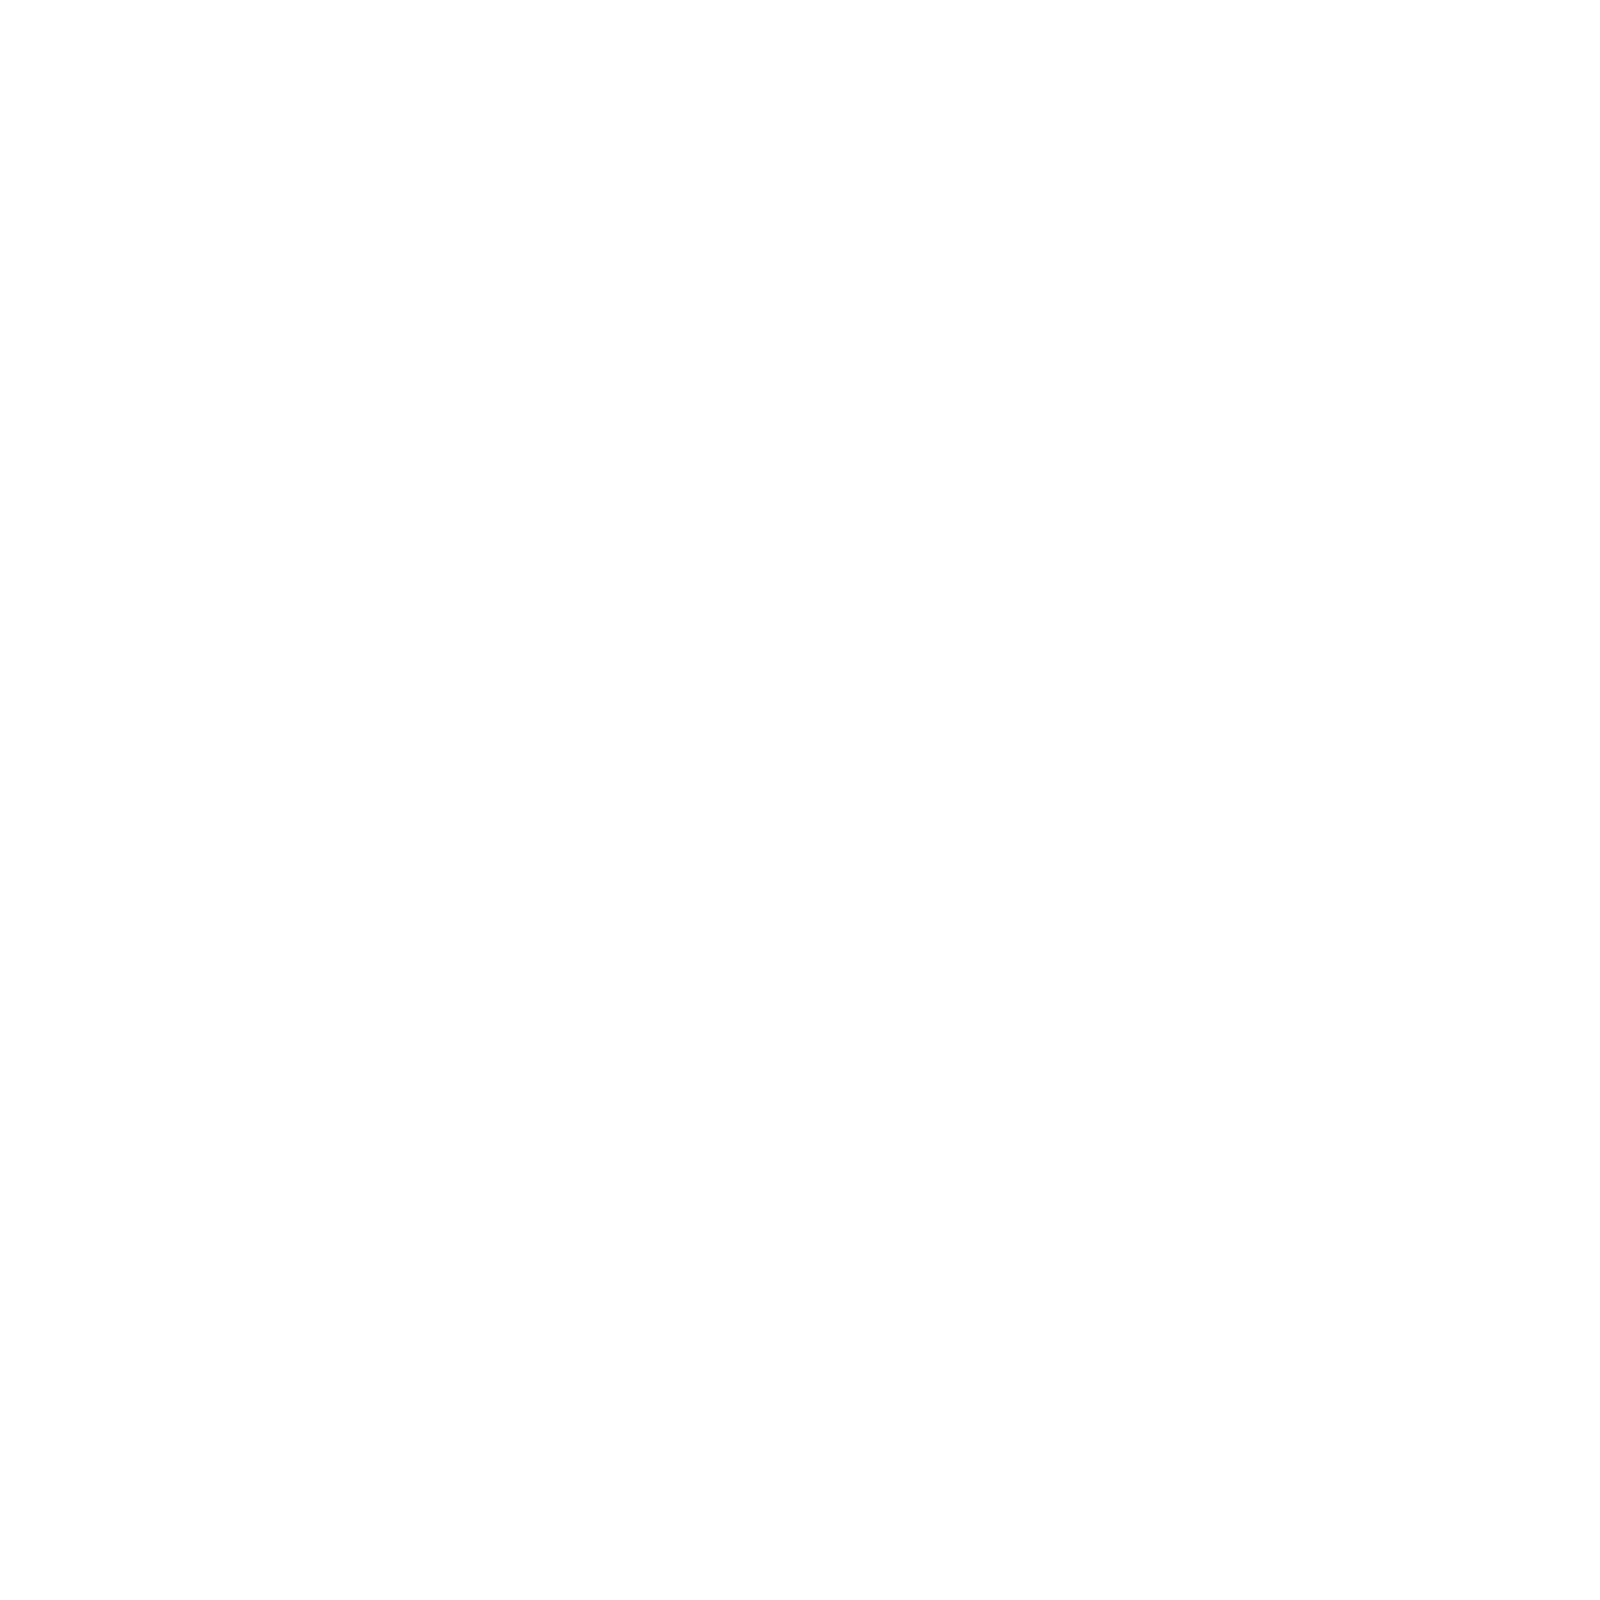 Deluxe Media Entertainment